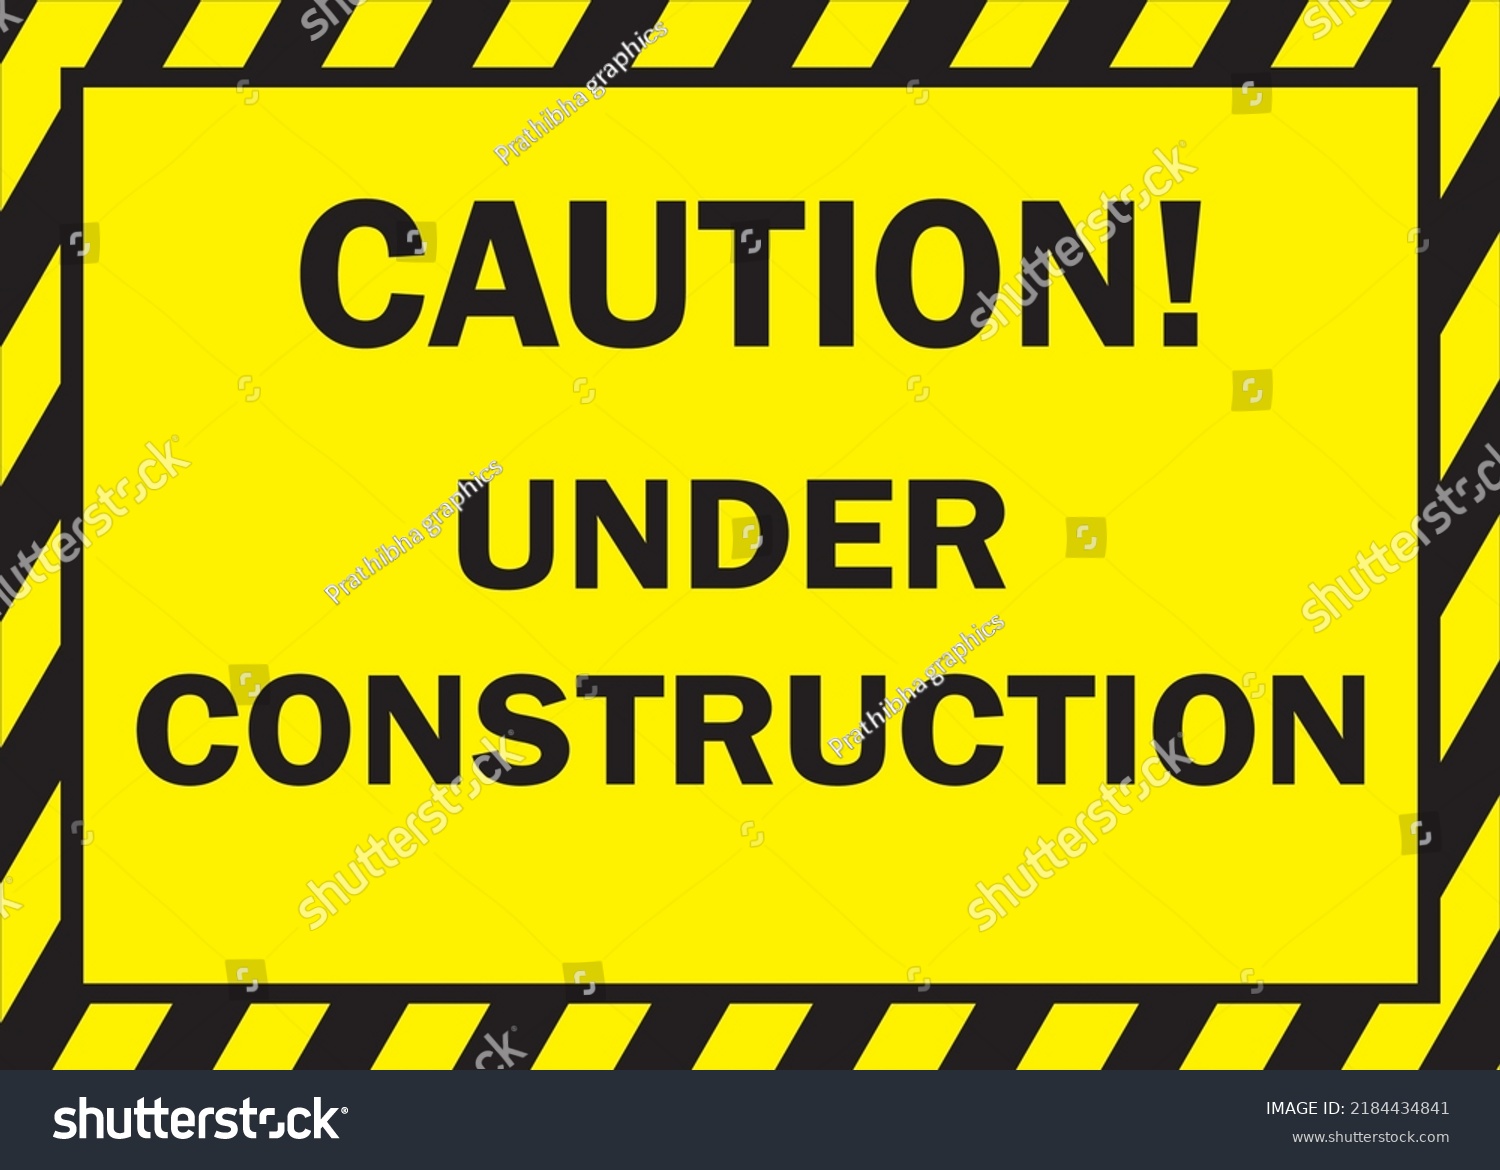 Under Construction Warning Sign Vector Stock Vector (Royalty Free ...